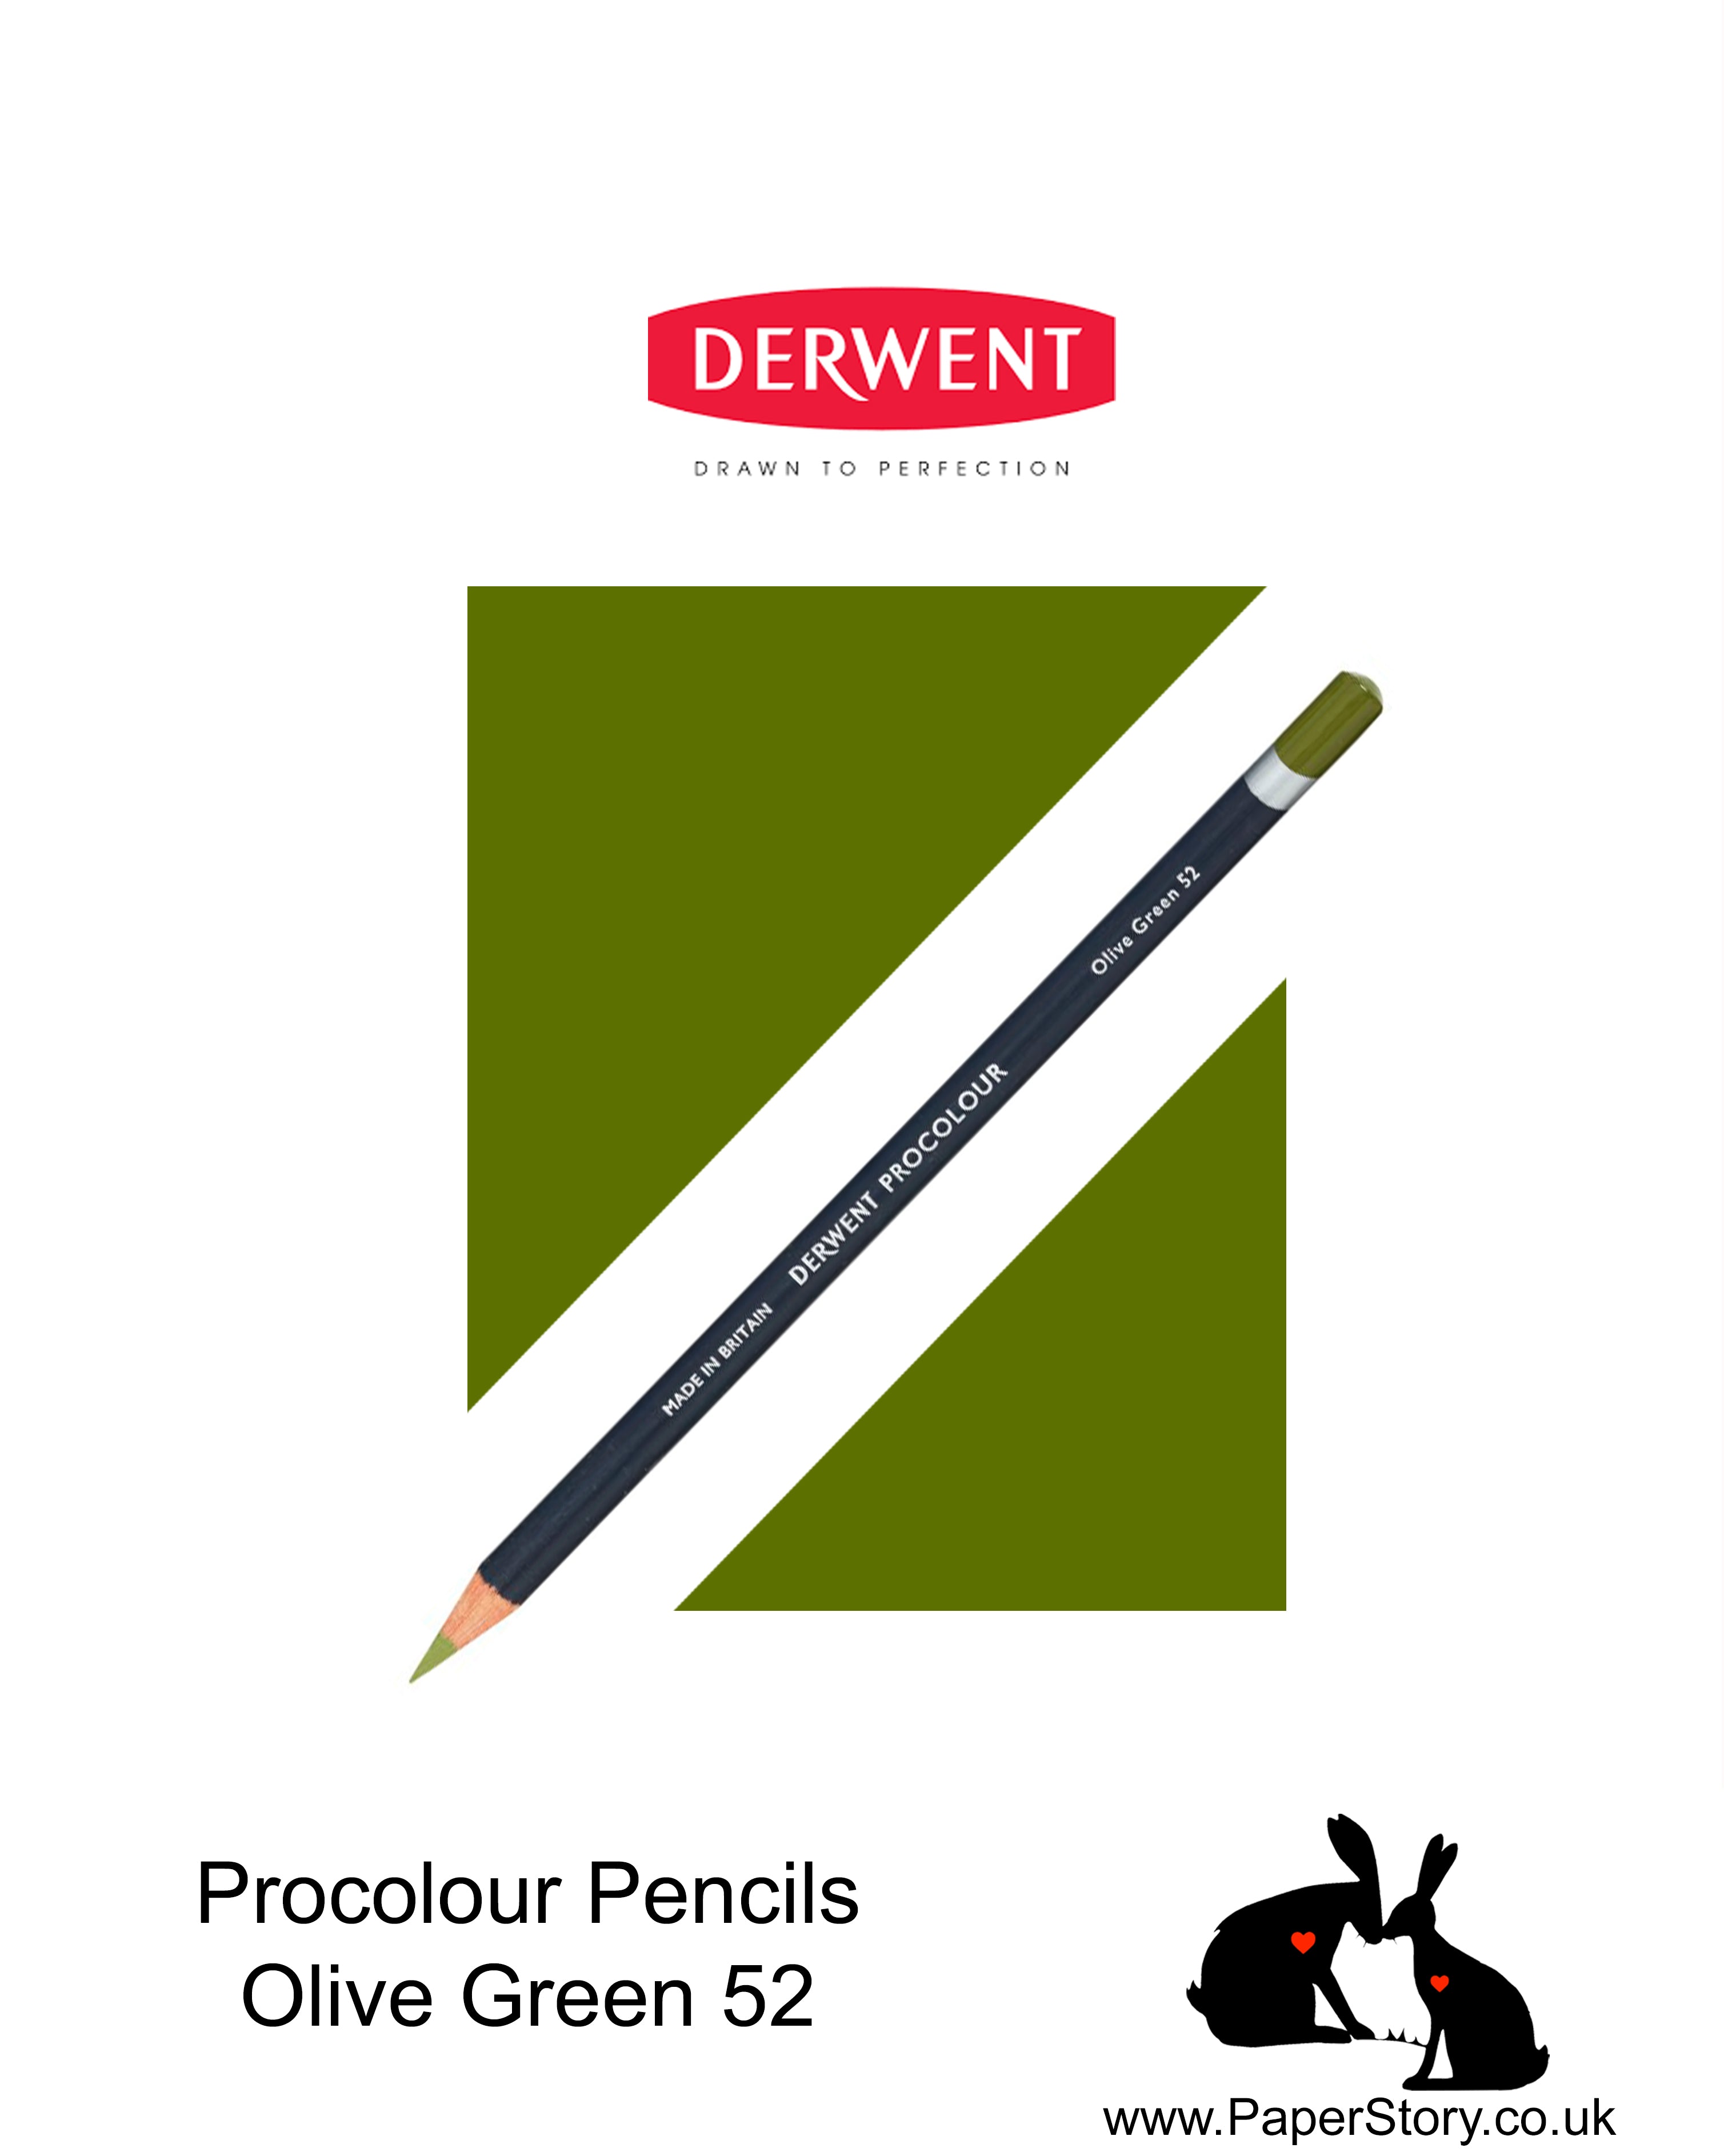 Derwent Procolour pencil Olive Green 52